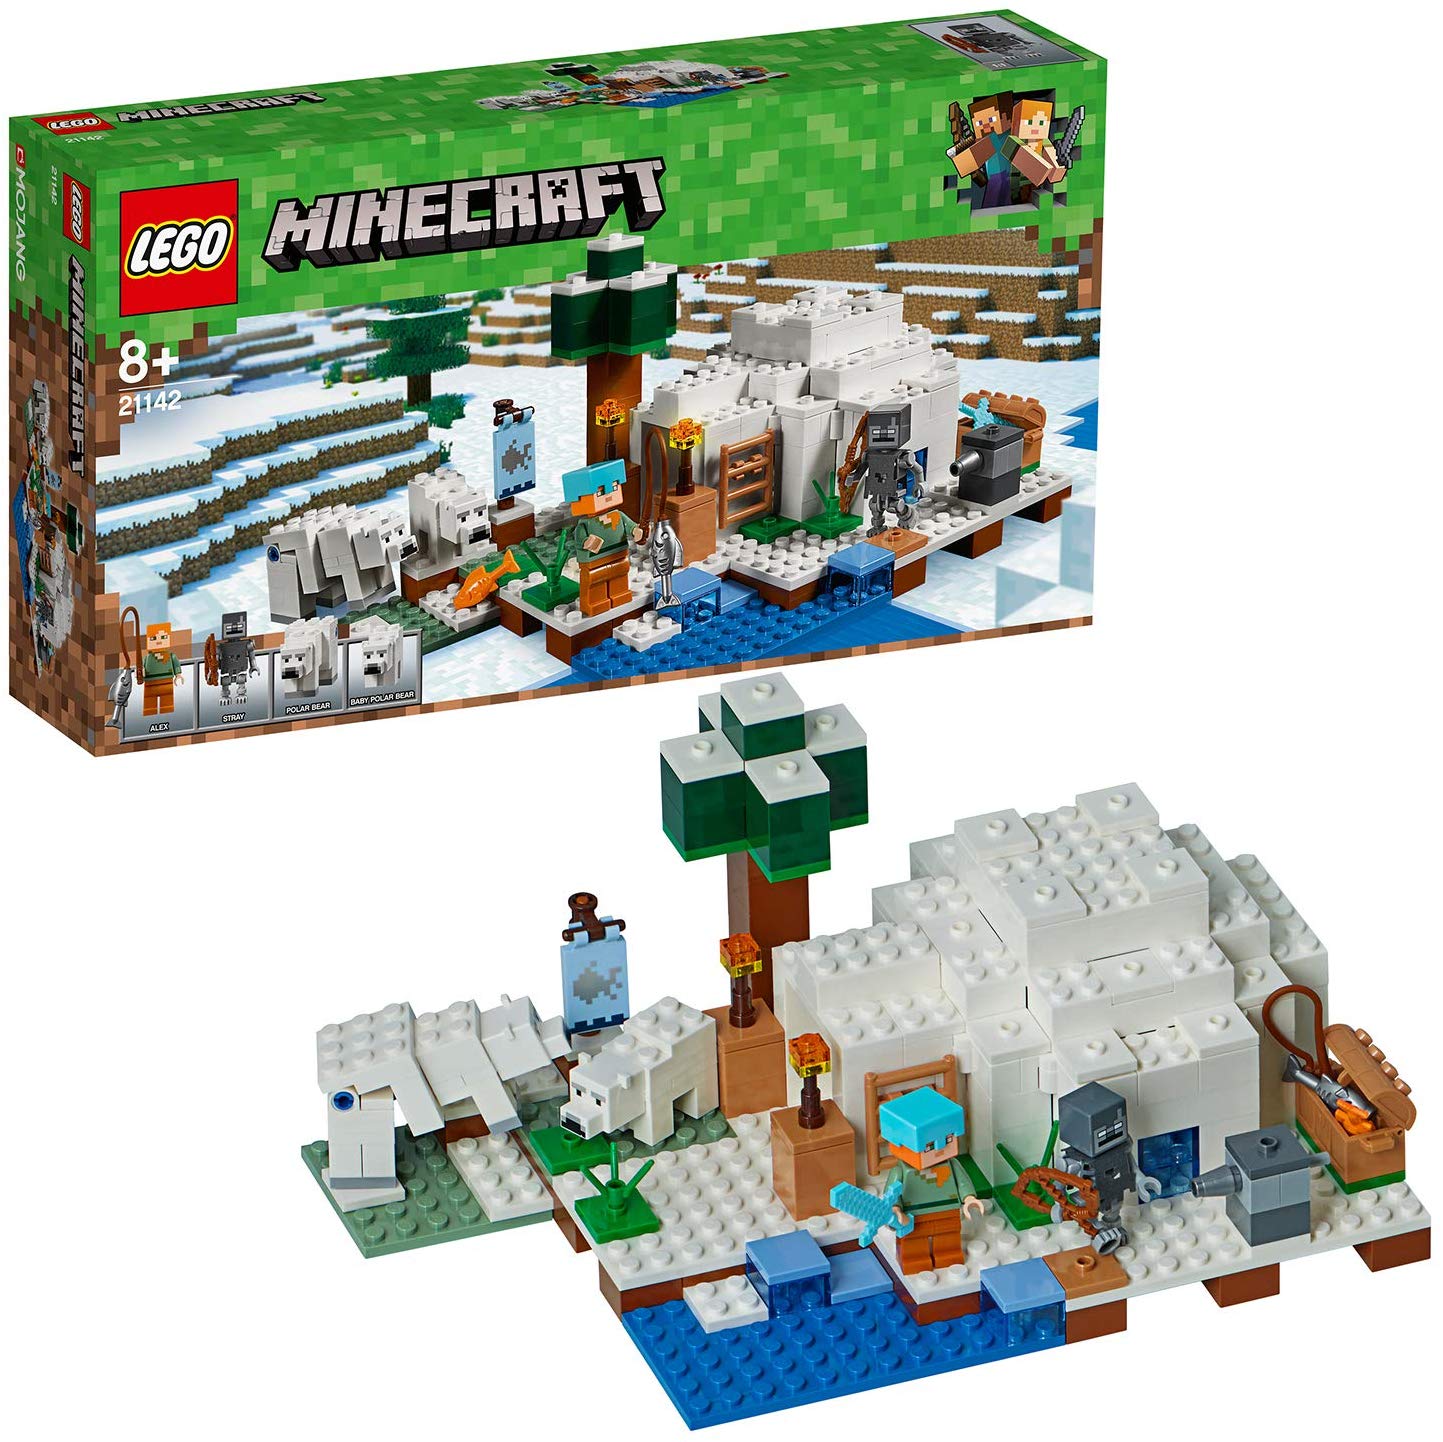 Lego Minecraft 21142 - The Polar Igloo Toy For Boys And Girls